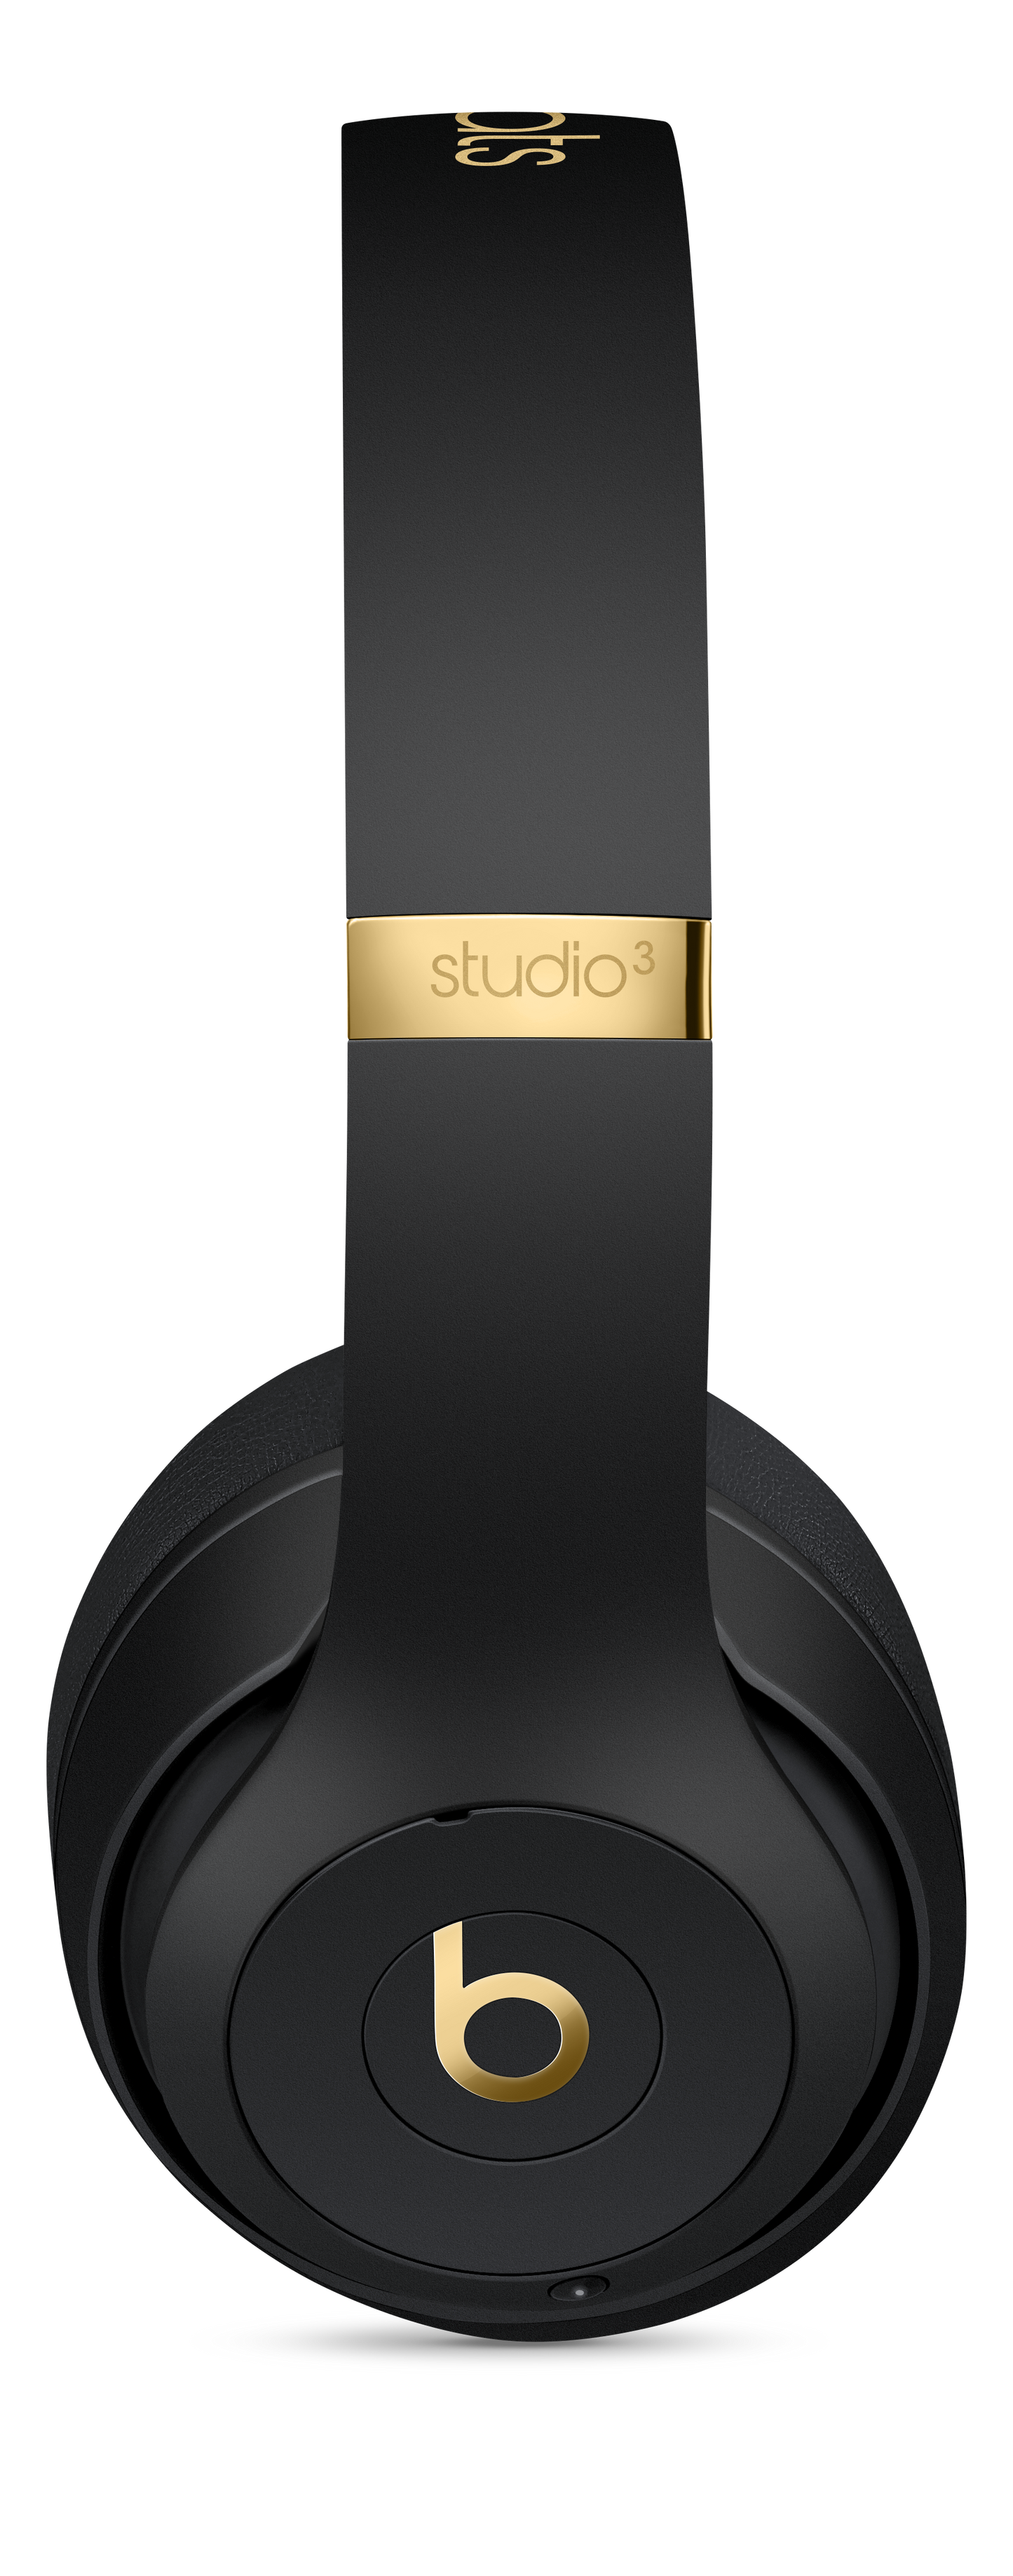 Beats Studio3 Wireless Over-Ear Headphones The Beats Skyline Collection - Midnight Black